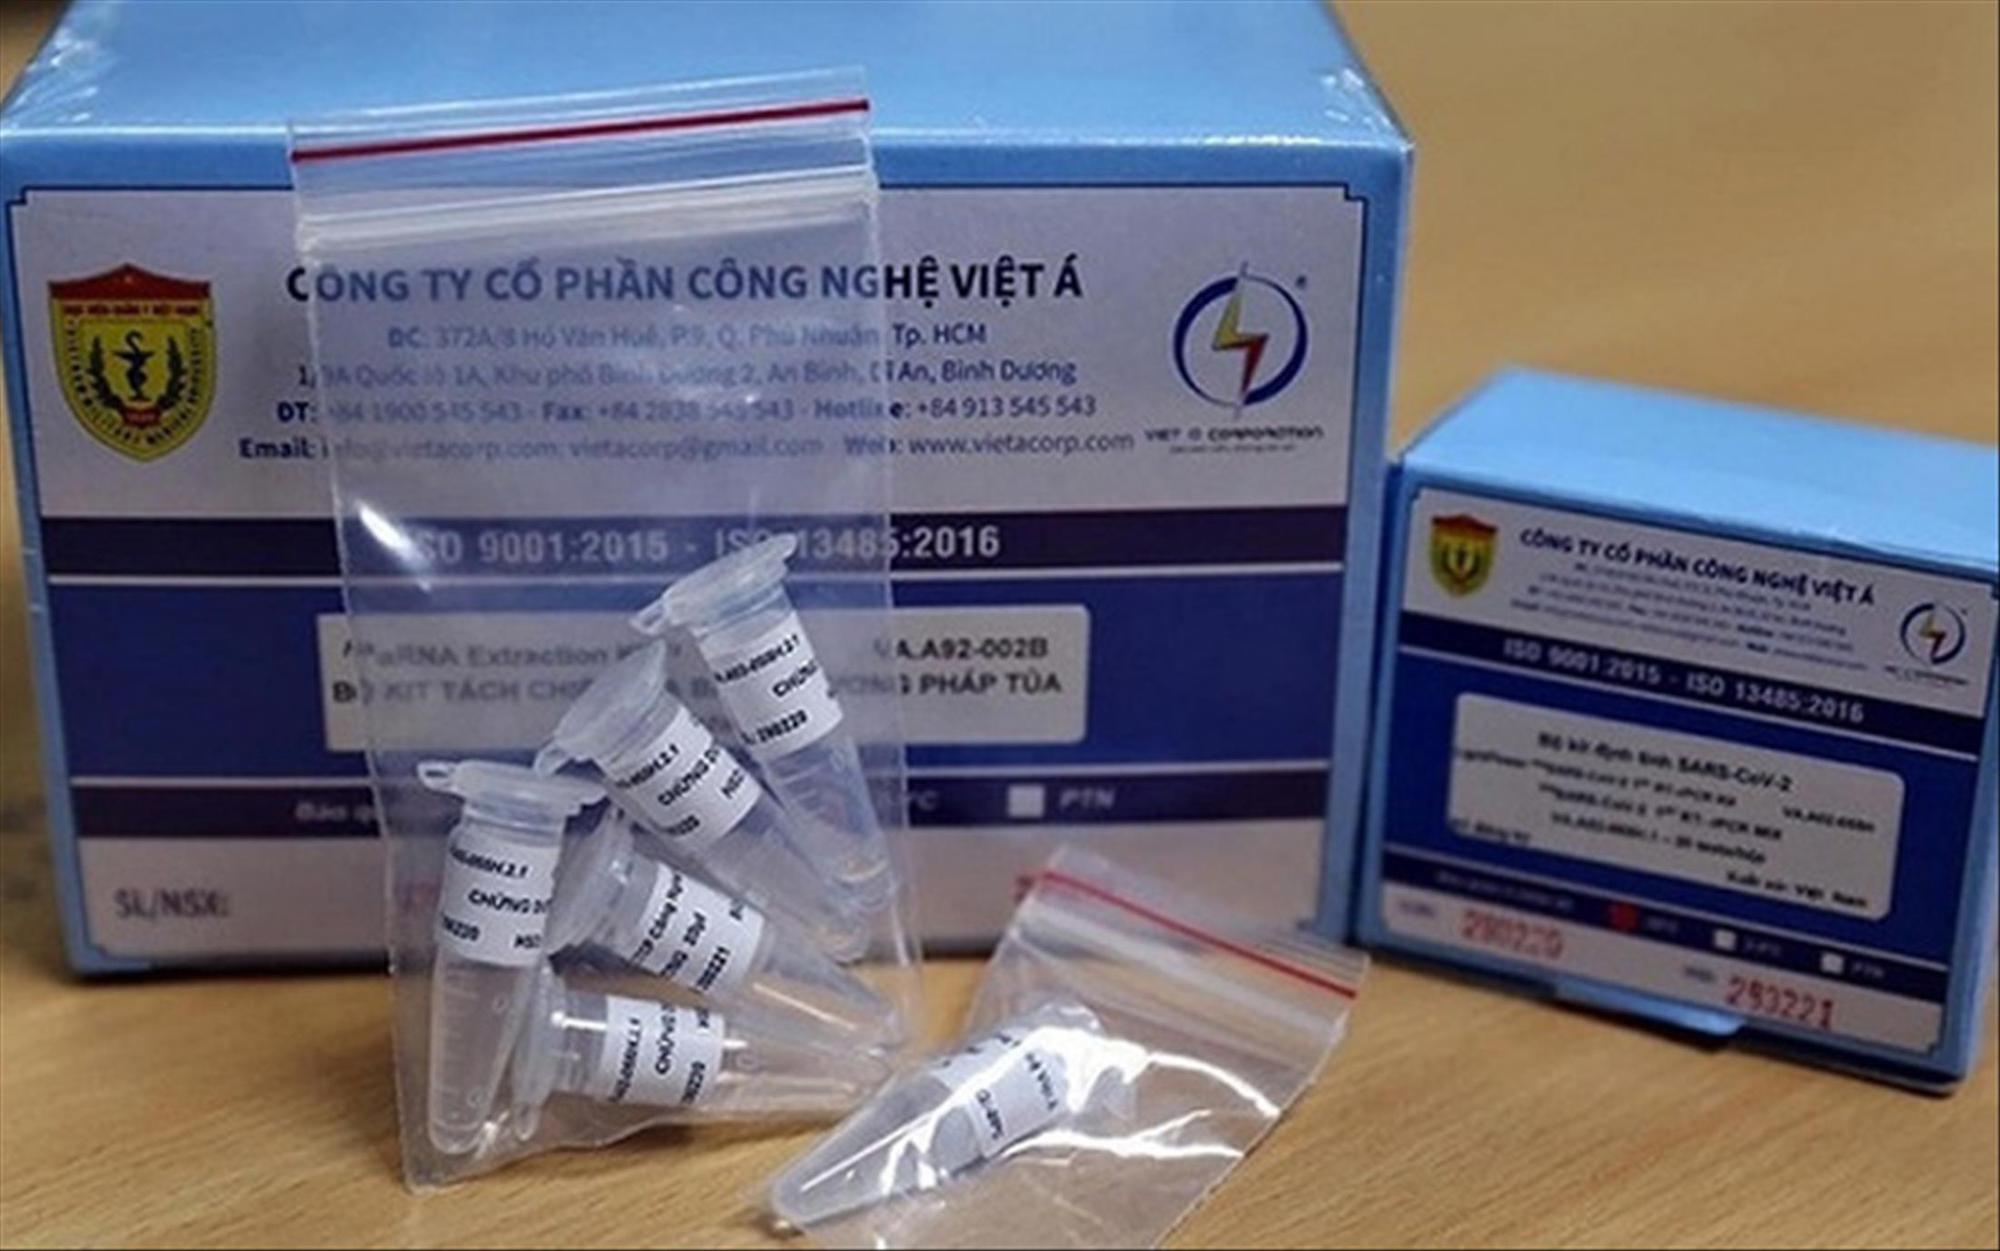 13 cases of having medical equipment registration numbers revoked in Vietnam 